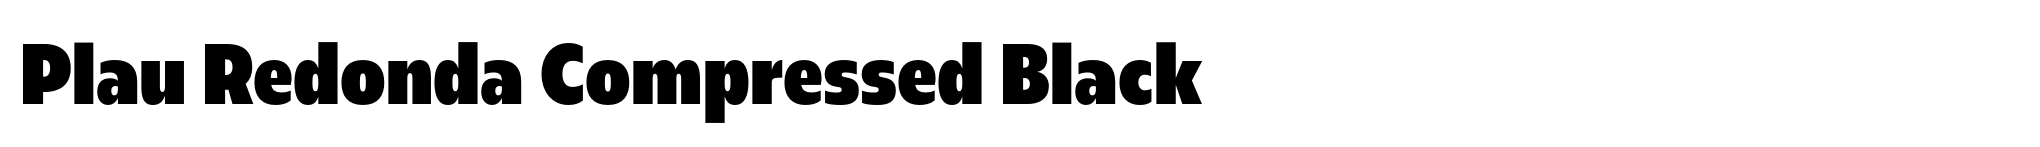 Plau Redonda Compressed Black image